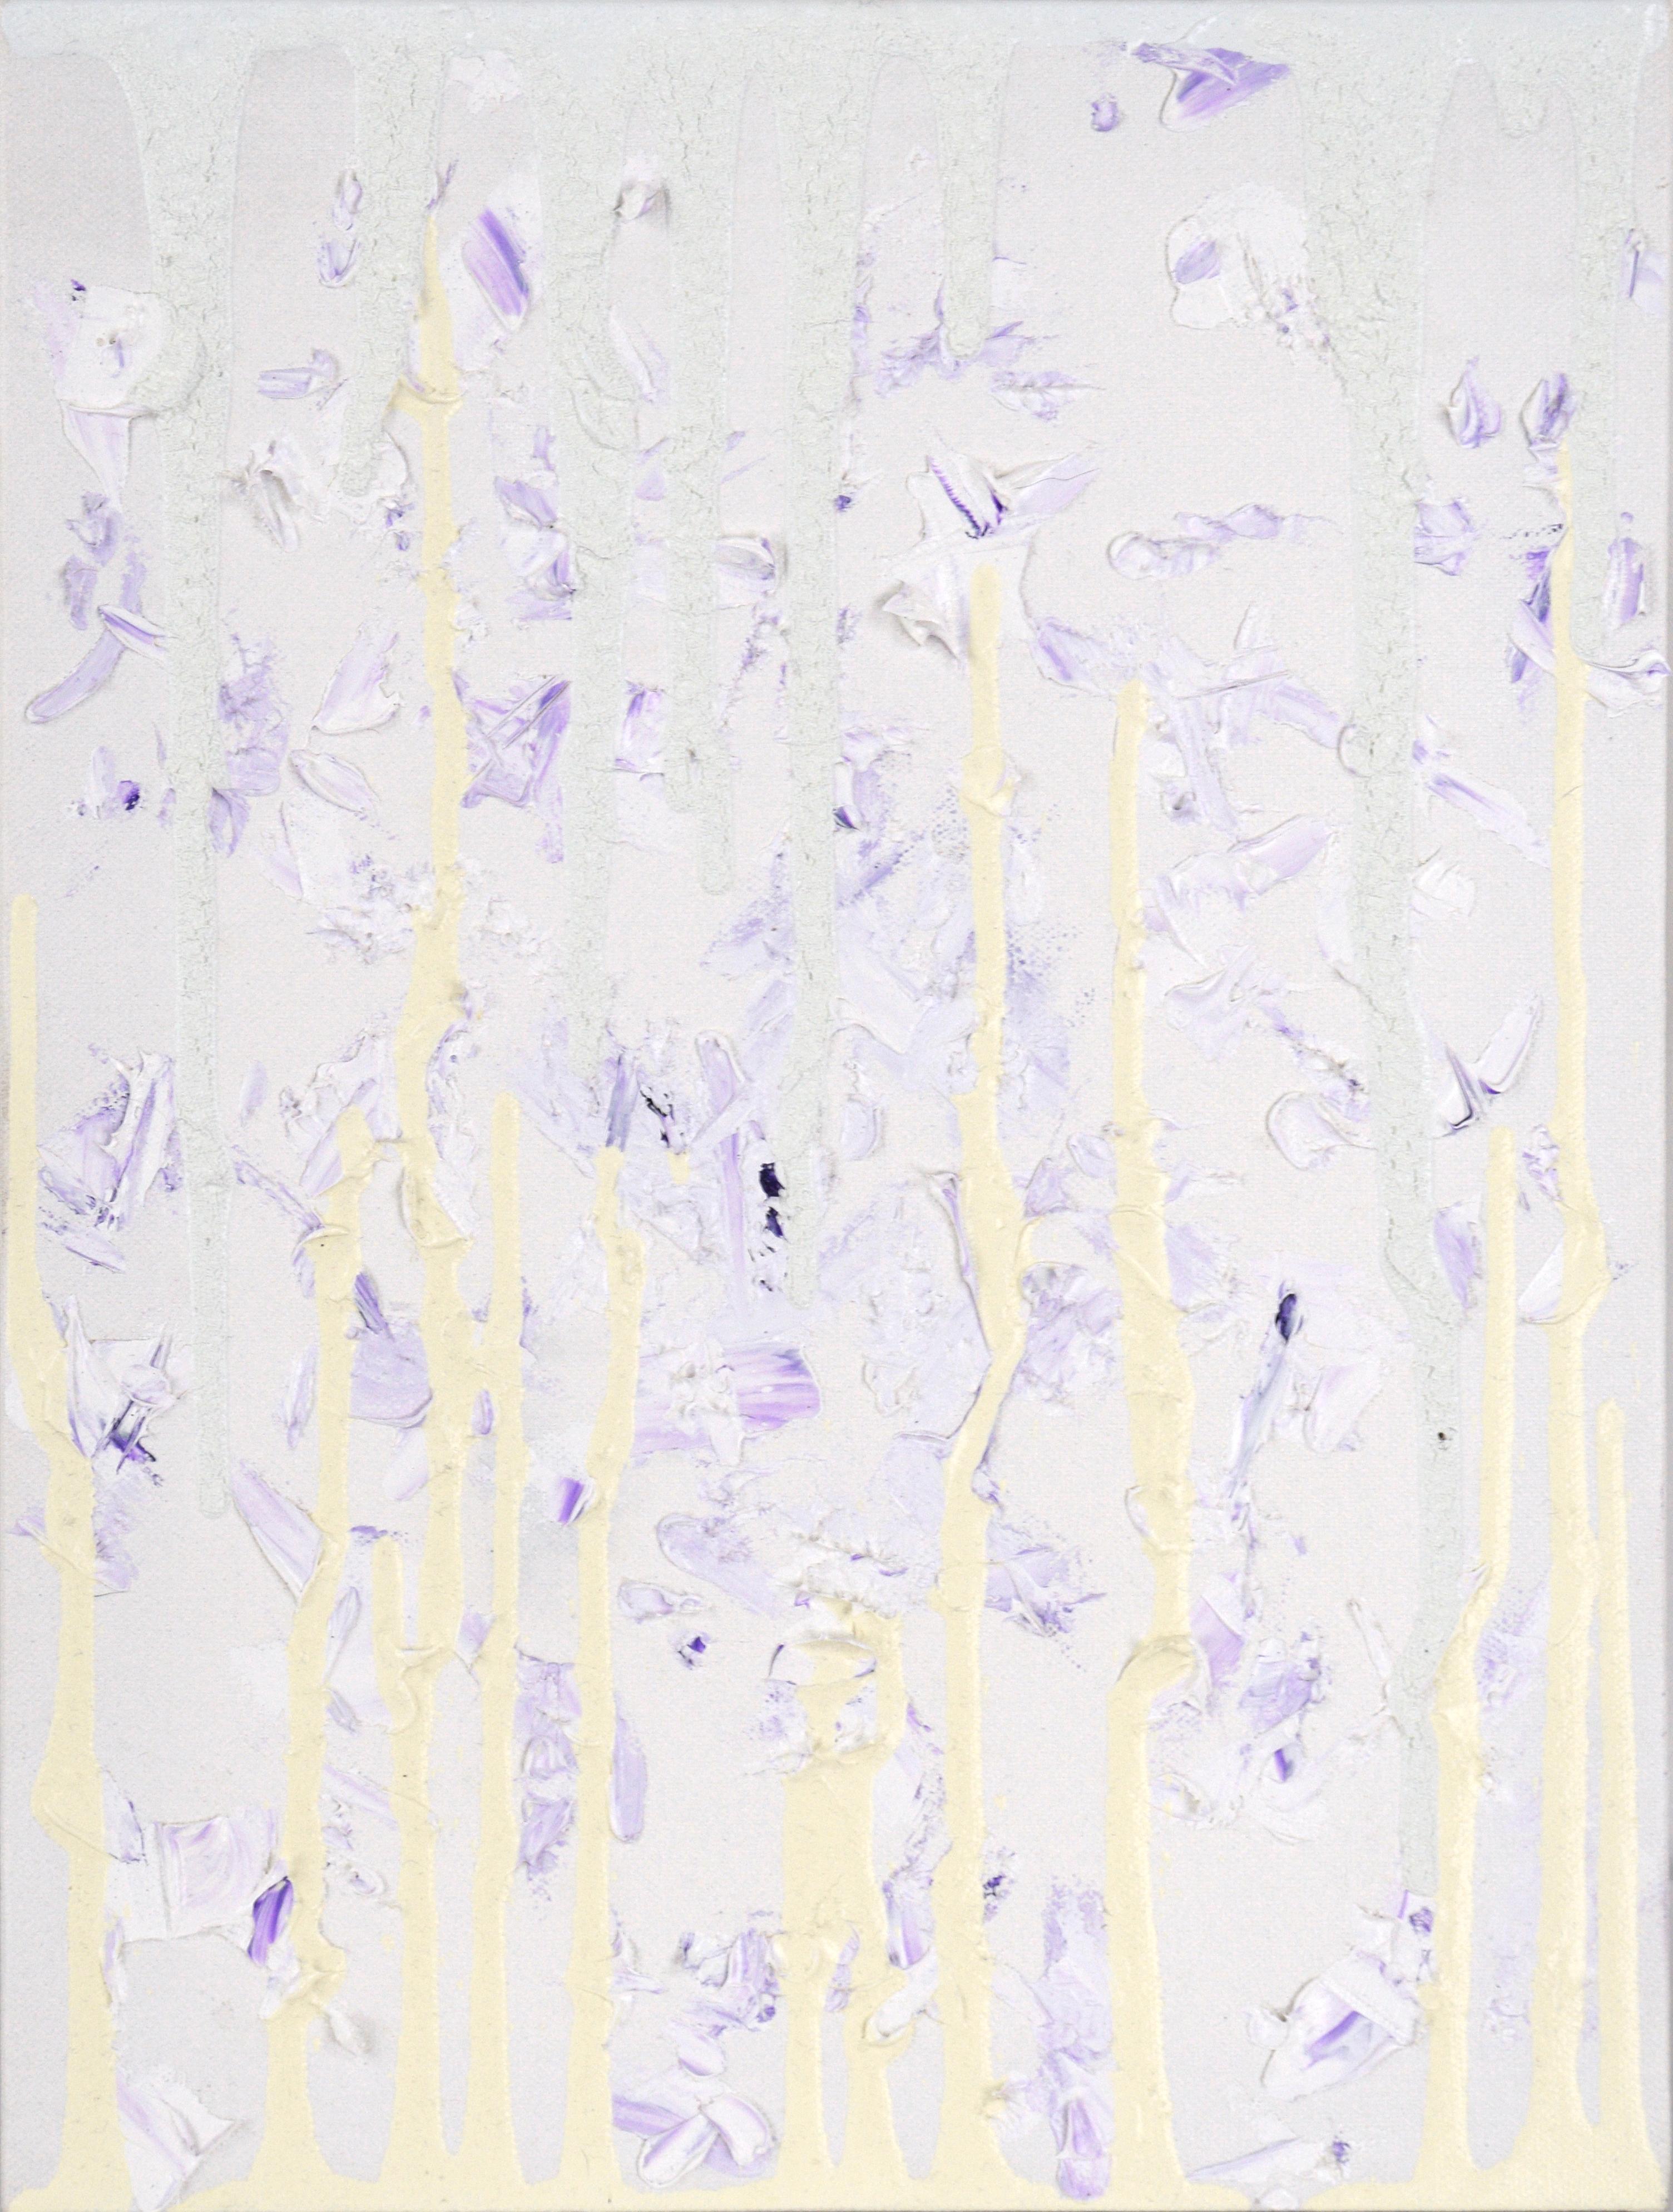 Devon Brockopp-Hammer Landscape Painting - "Pastel Nightmare" - Abstract Expressionist Composition